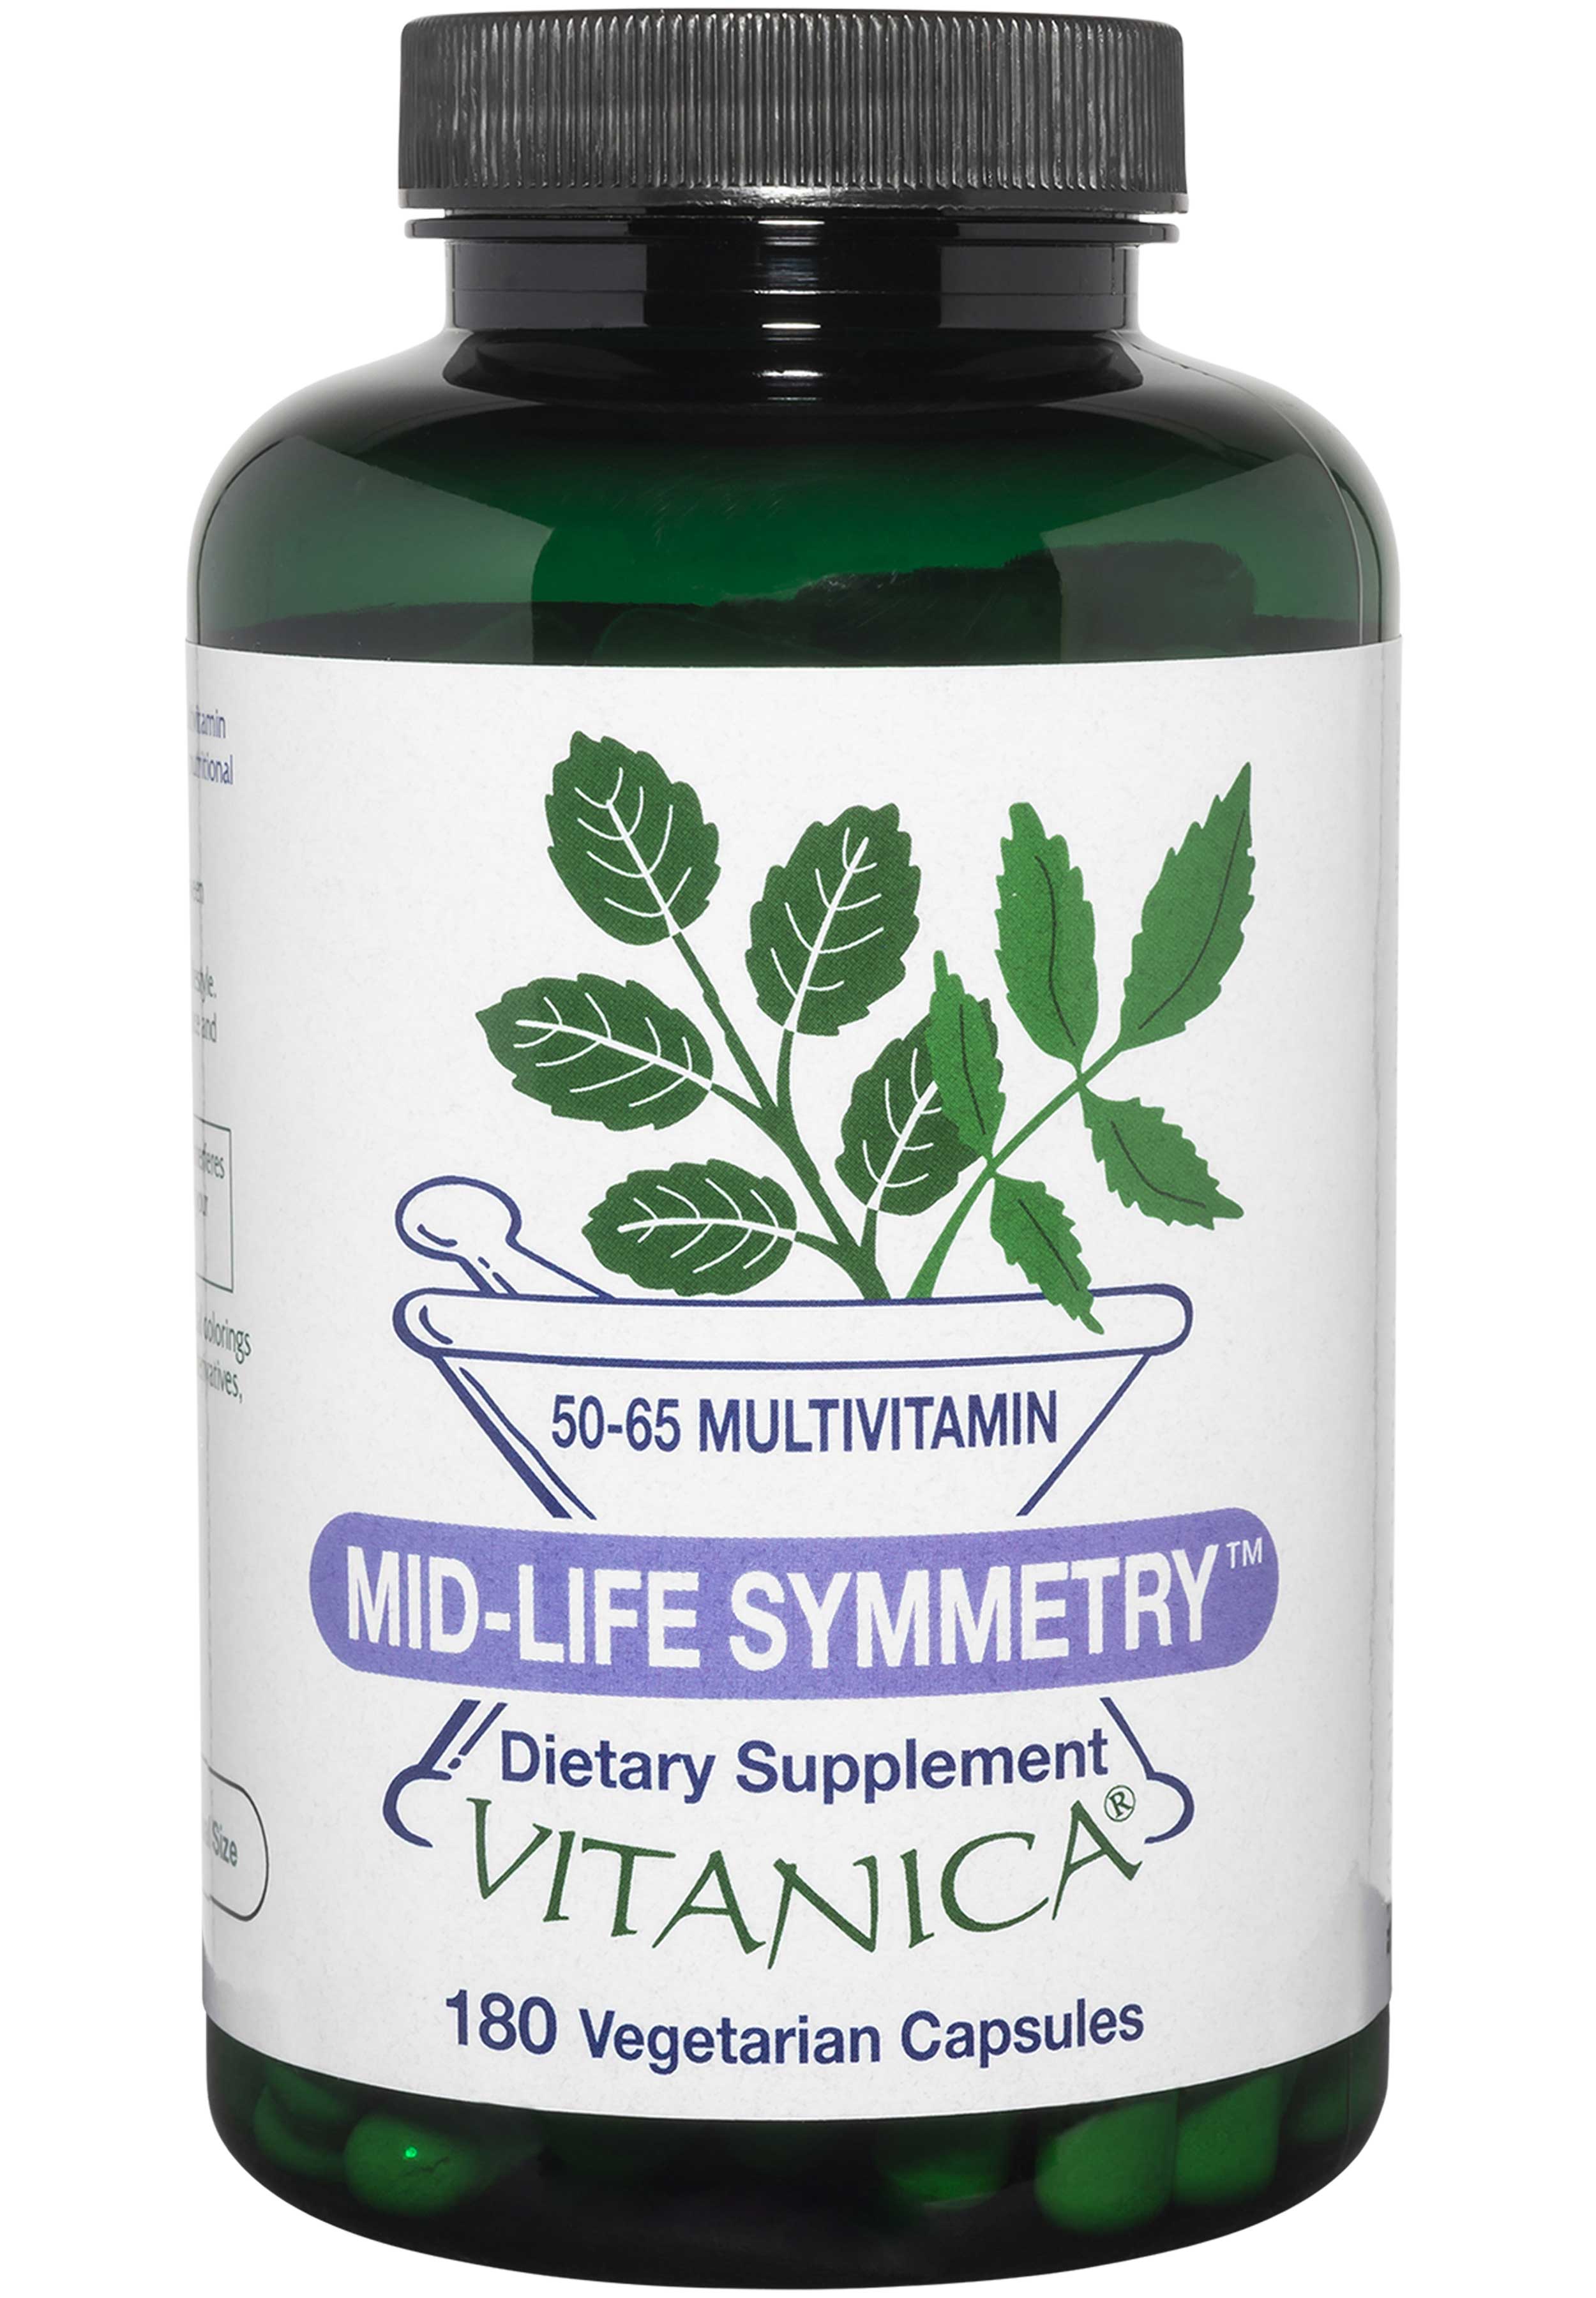 Vitanica Mid-Life Symmetry